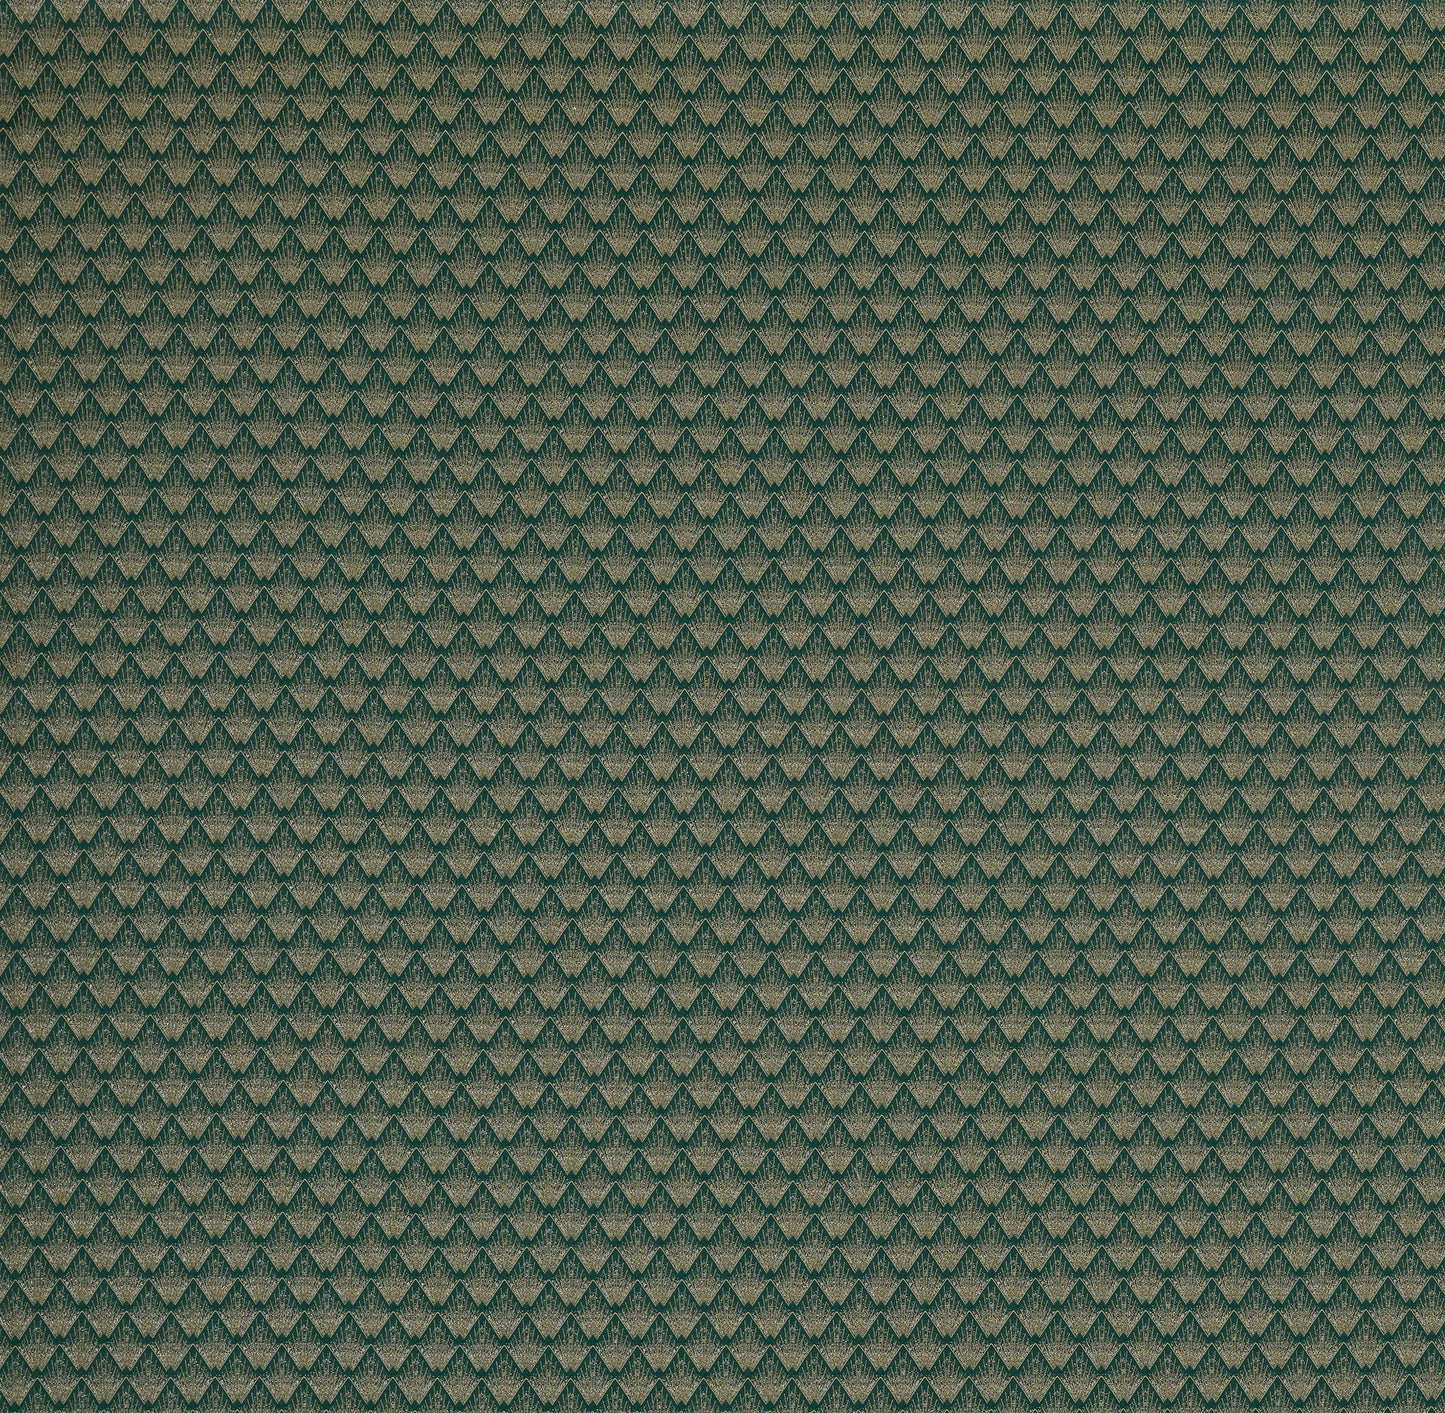 Ashley Wilde Poiret Emerald Cushion Cover